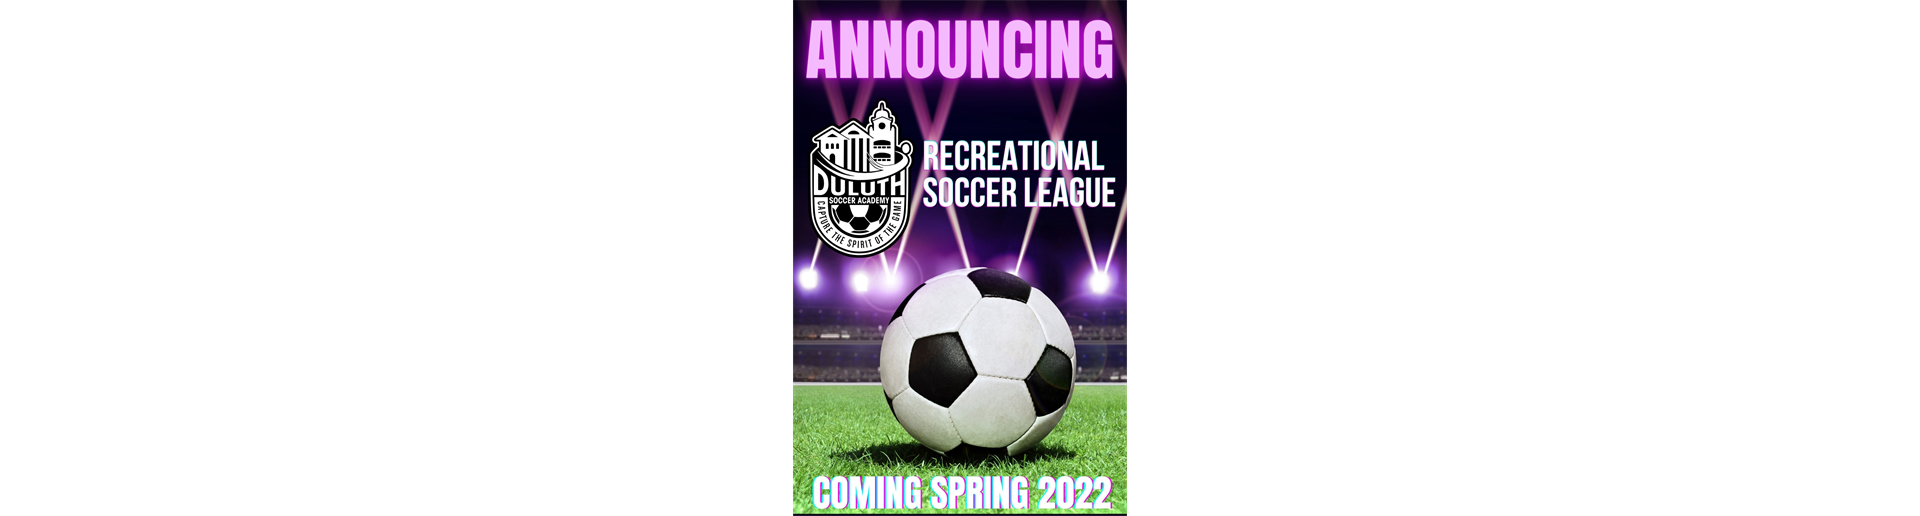 Announcing Recreational Soccer League